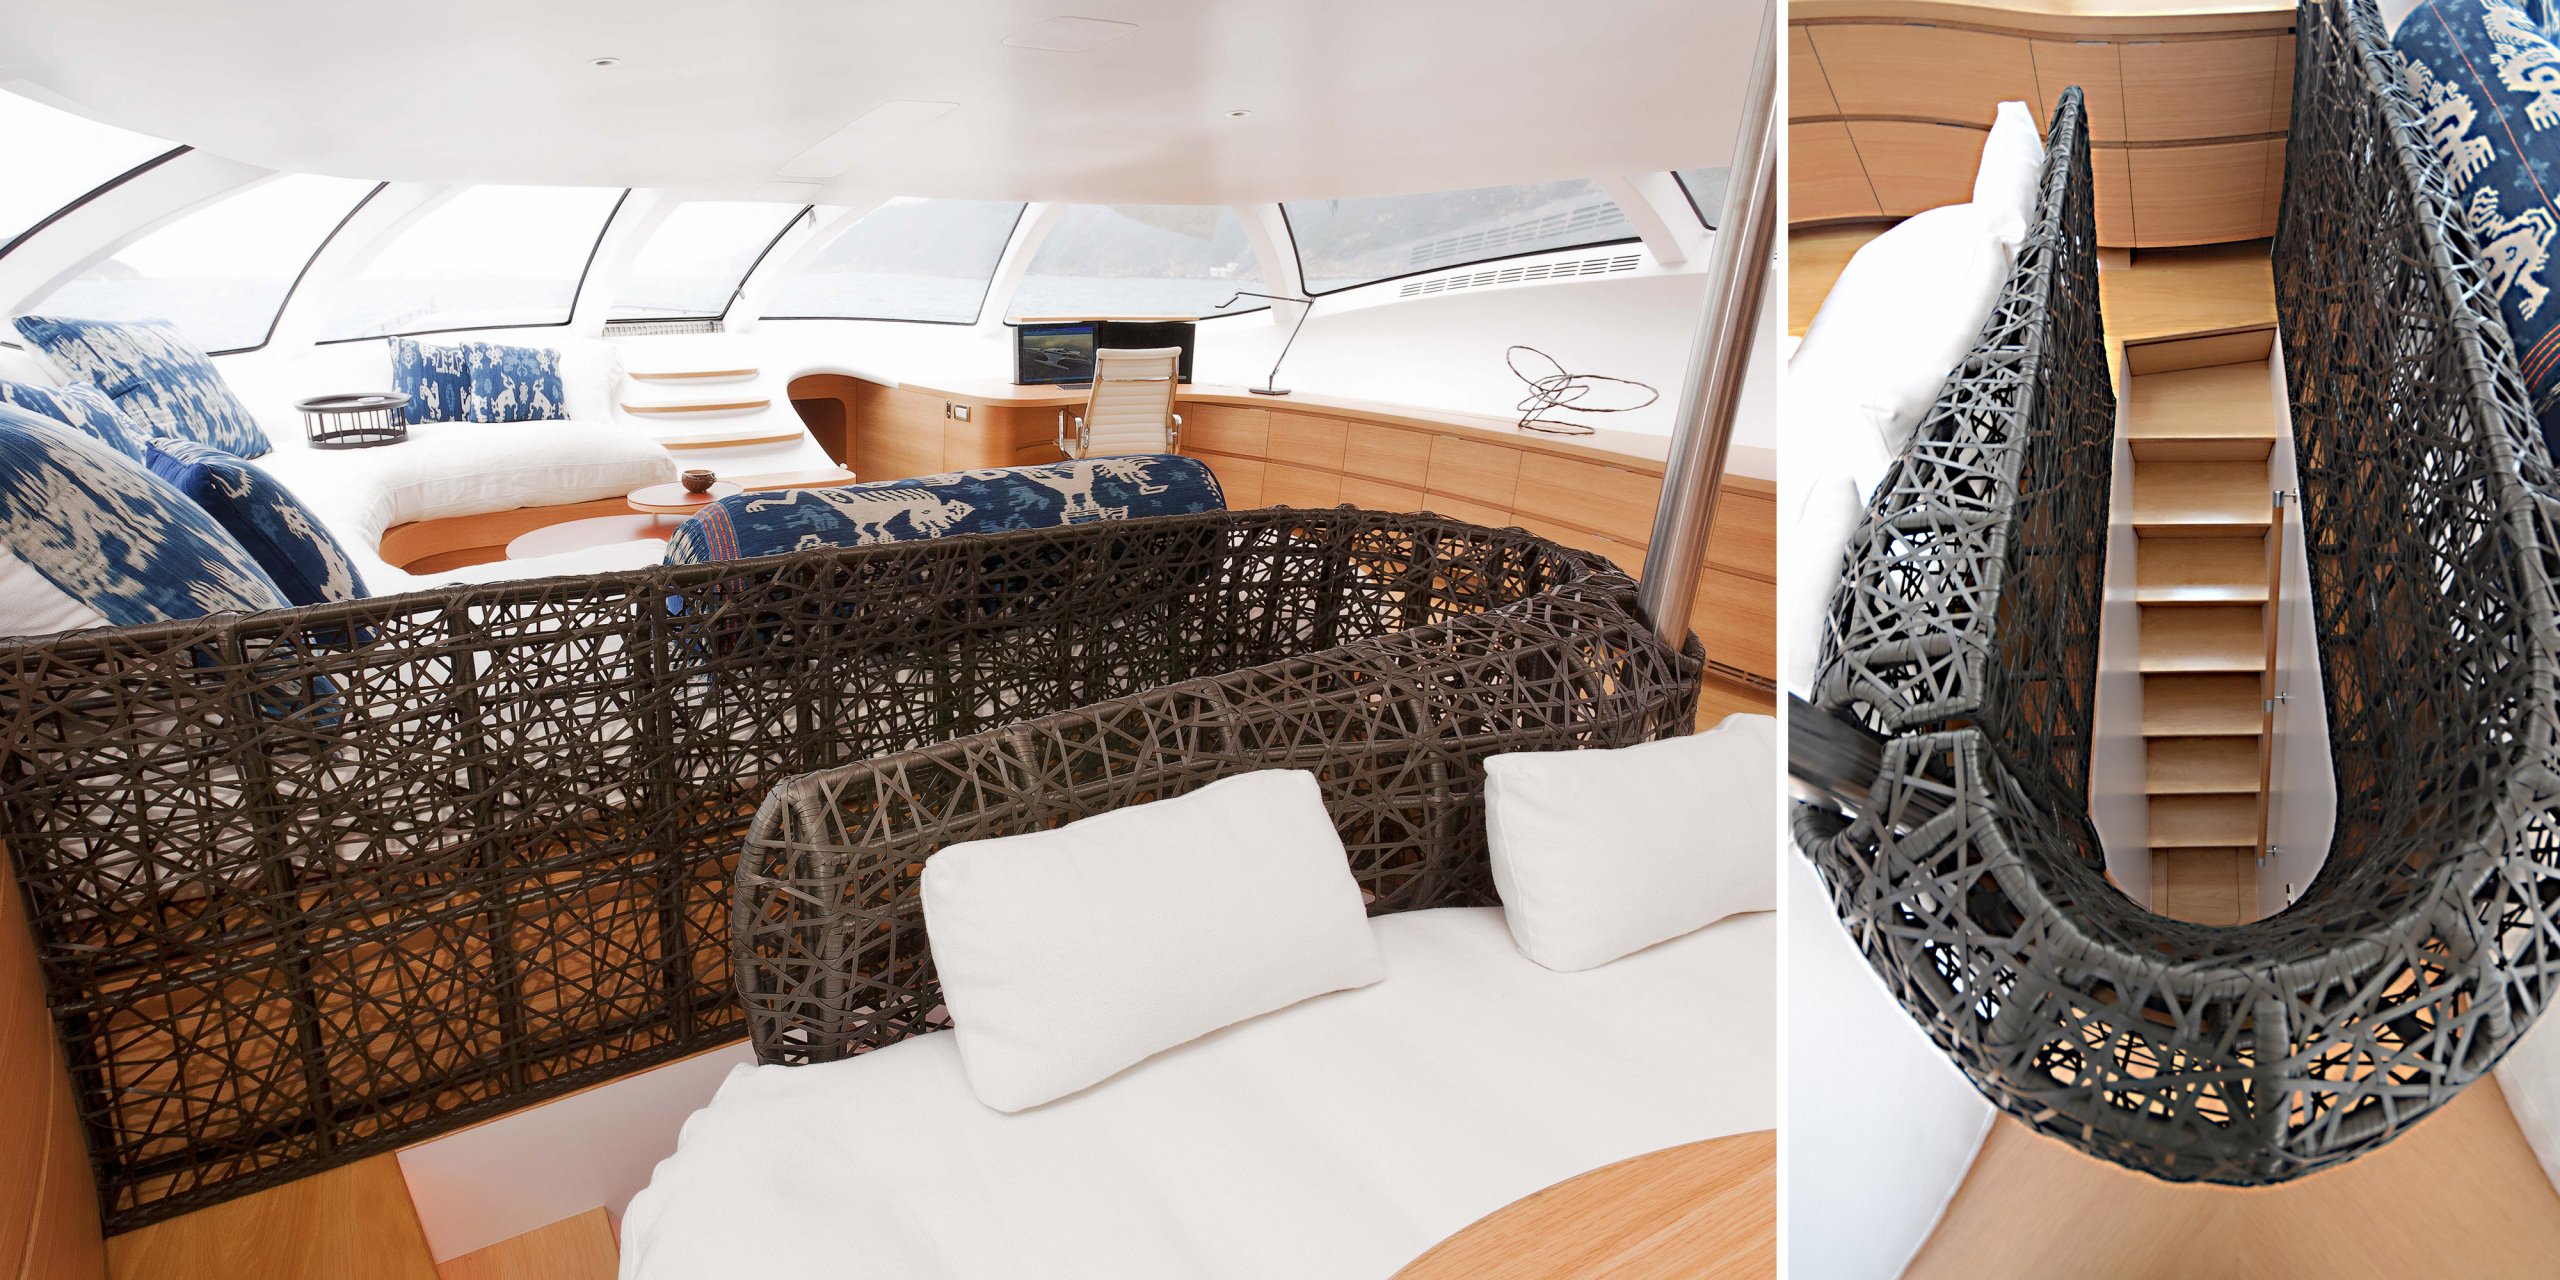 interno dell'yacht Adastra 